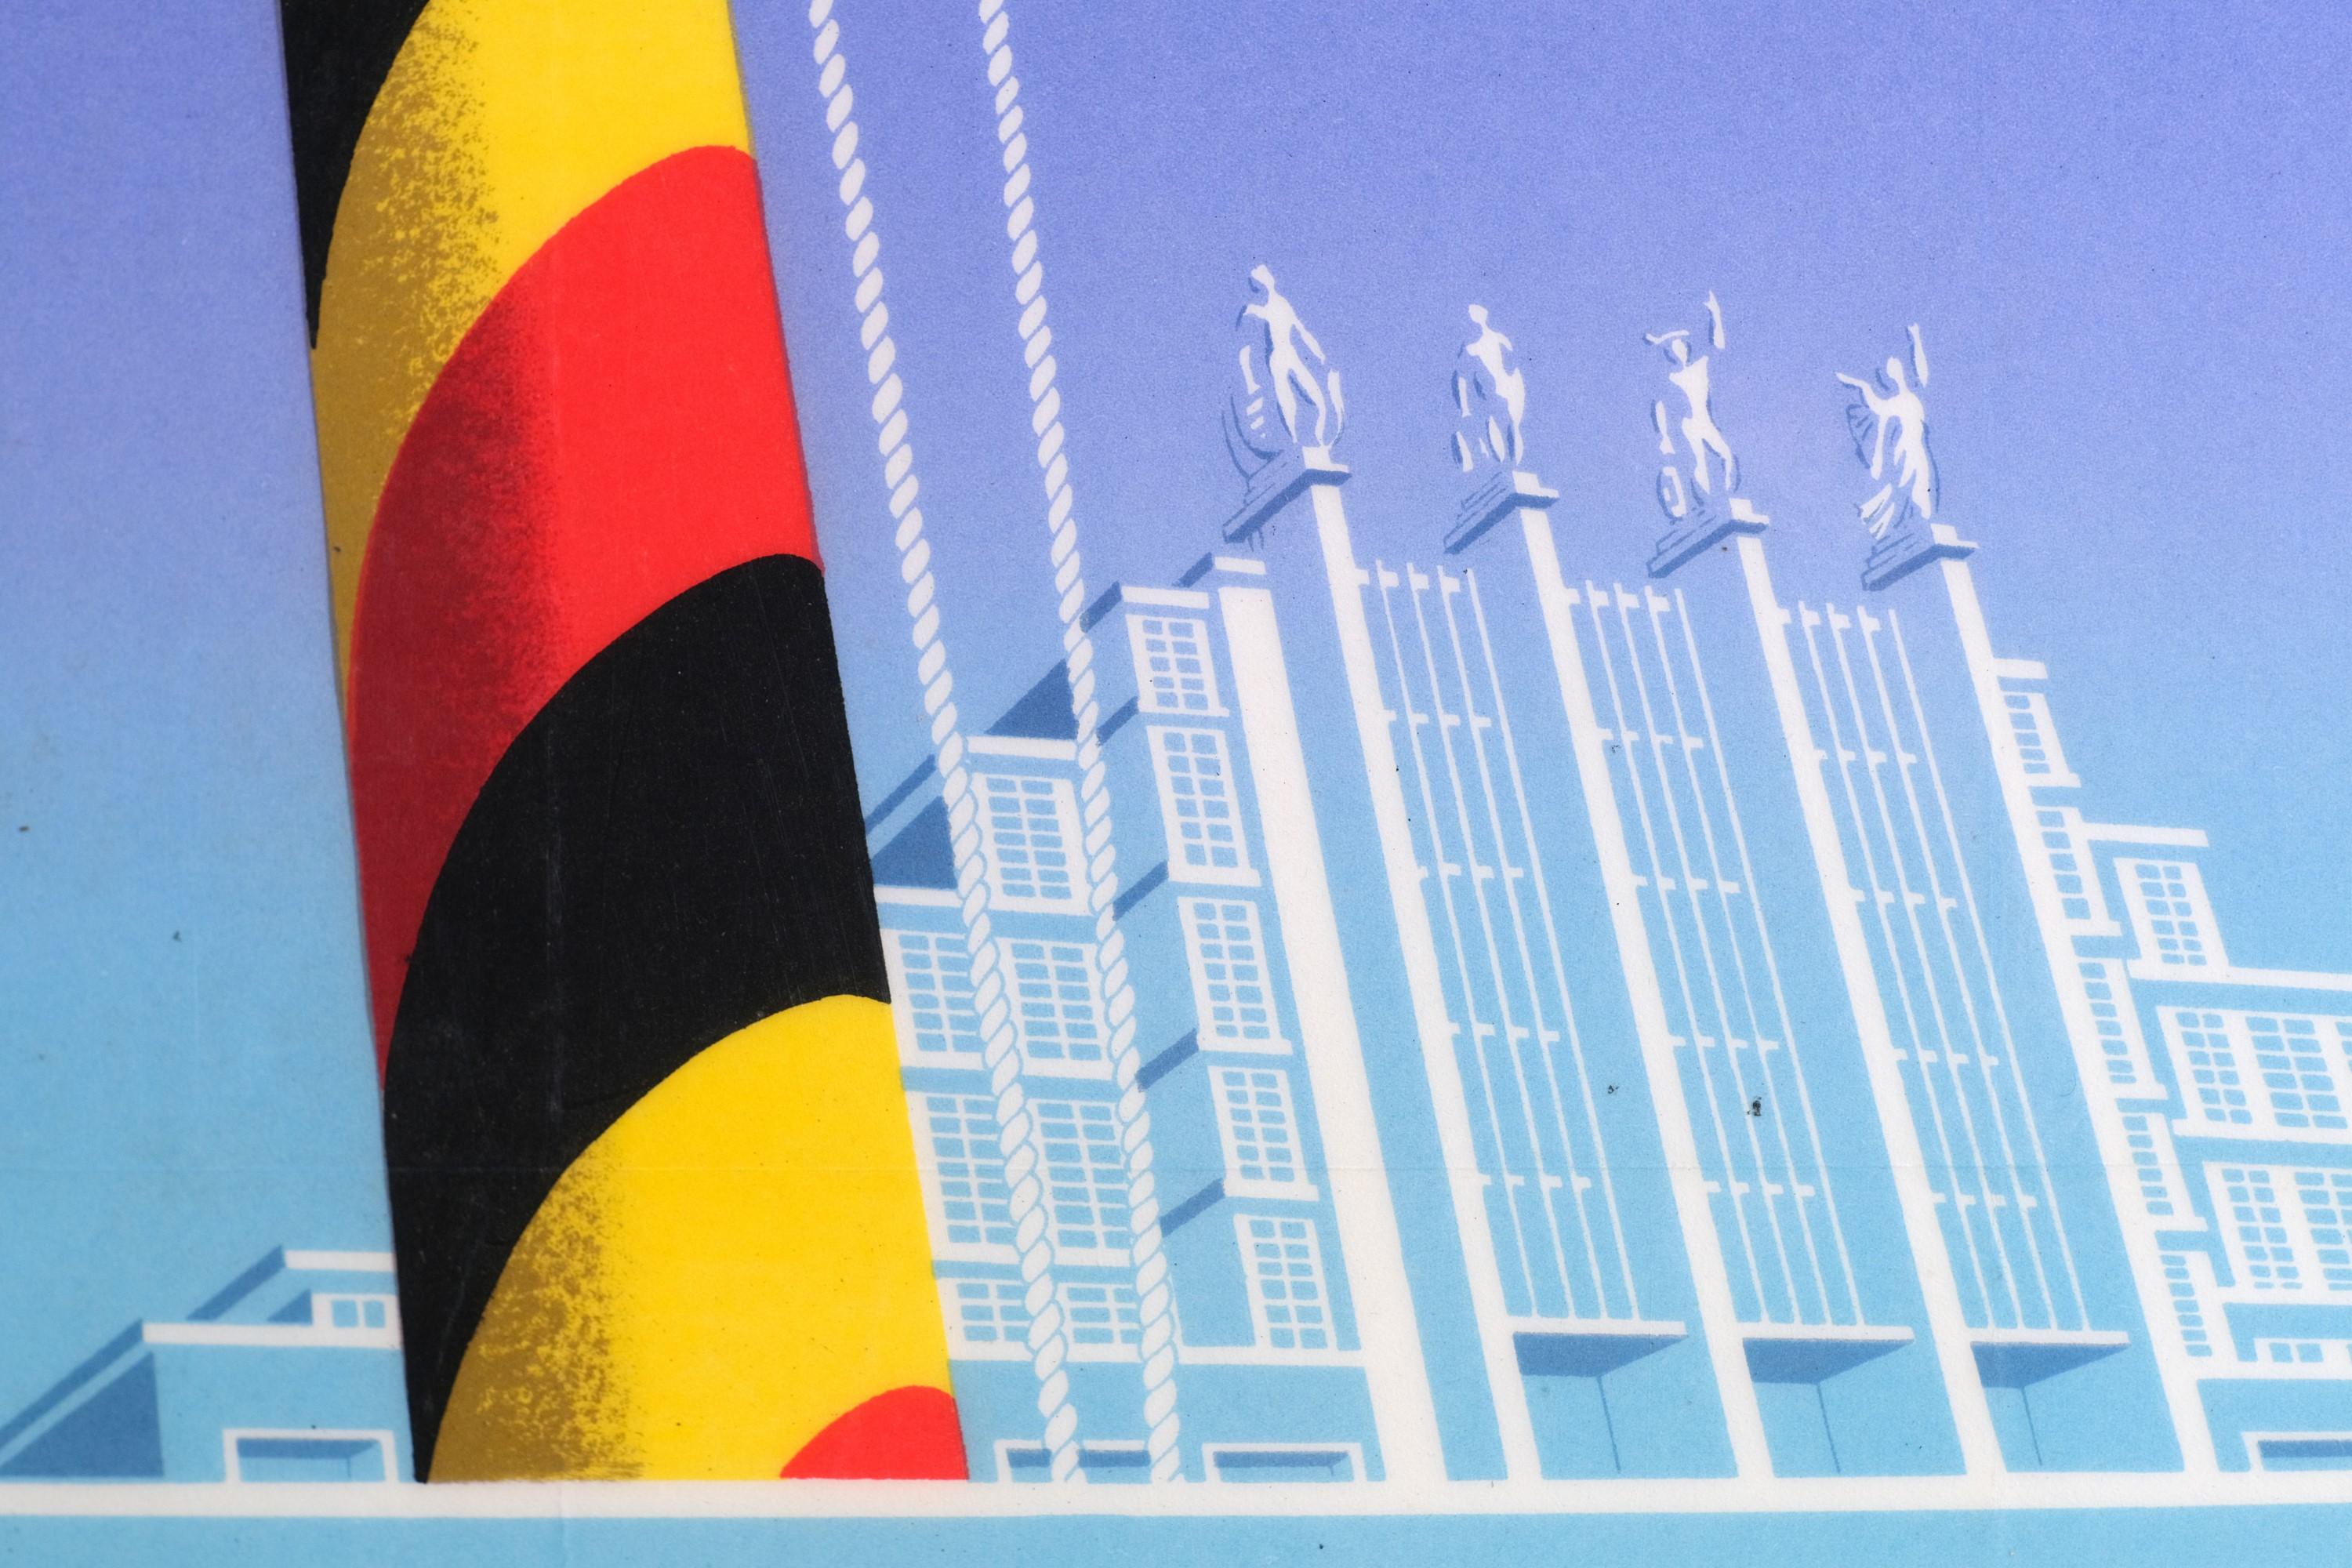 European Original 1954 Foire Internationale Bruxelles Poster Worlds Fair